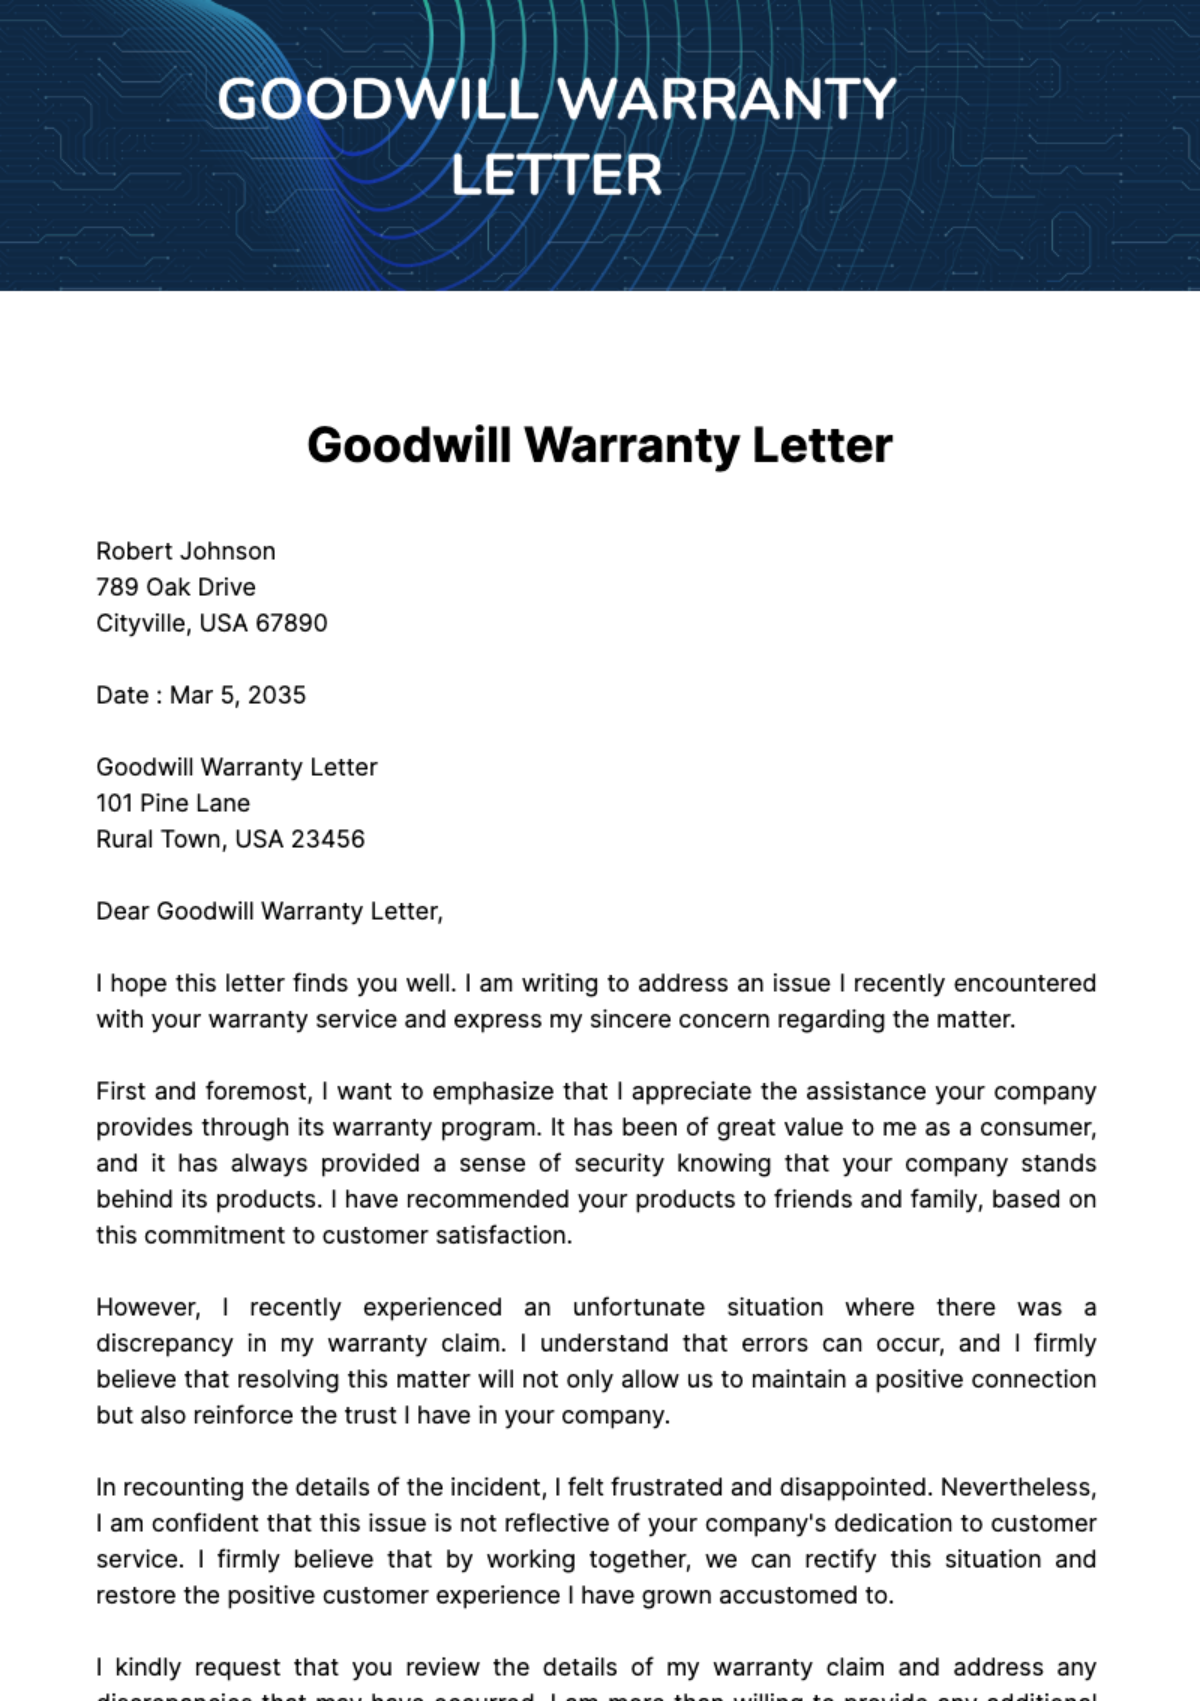 Free Goodwill Warranty Letter Template